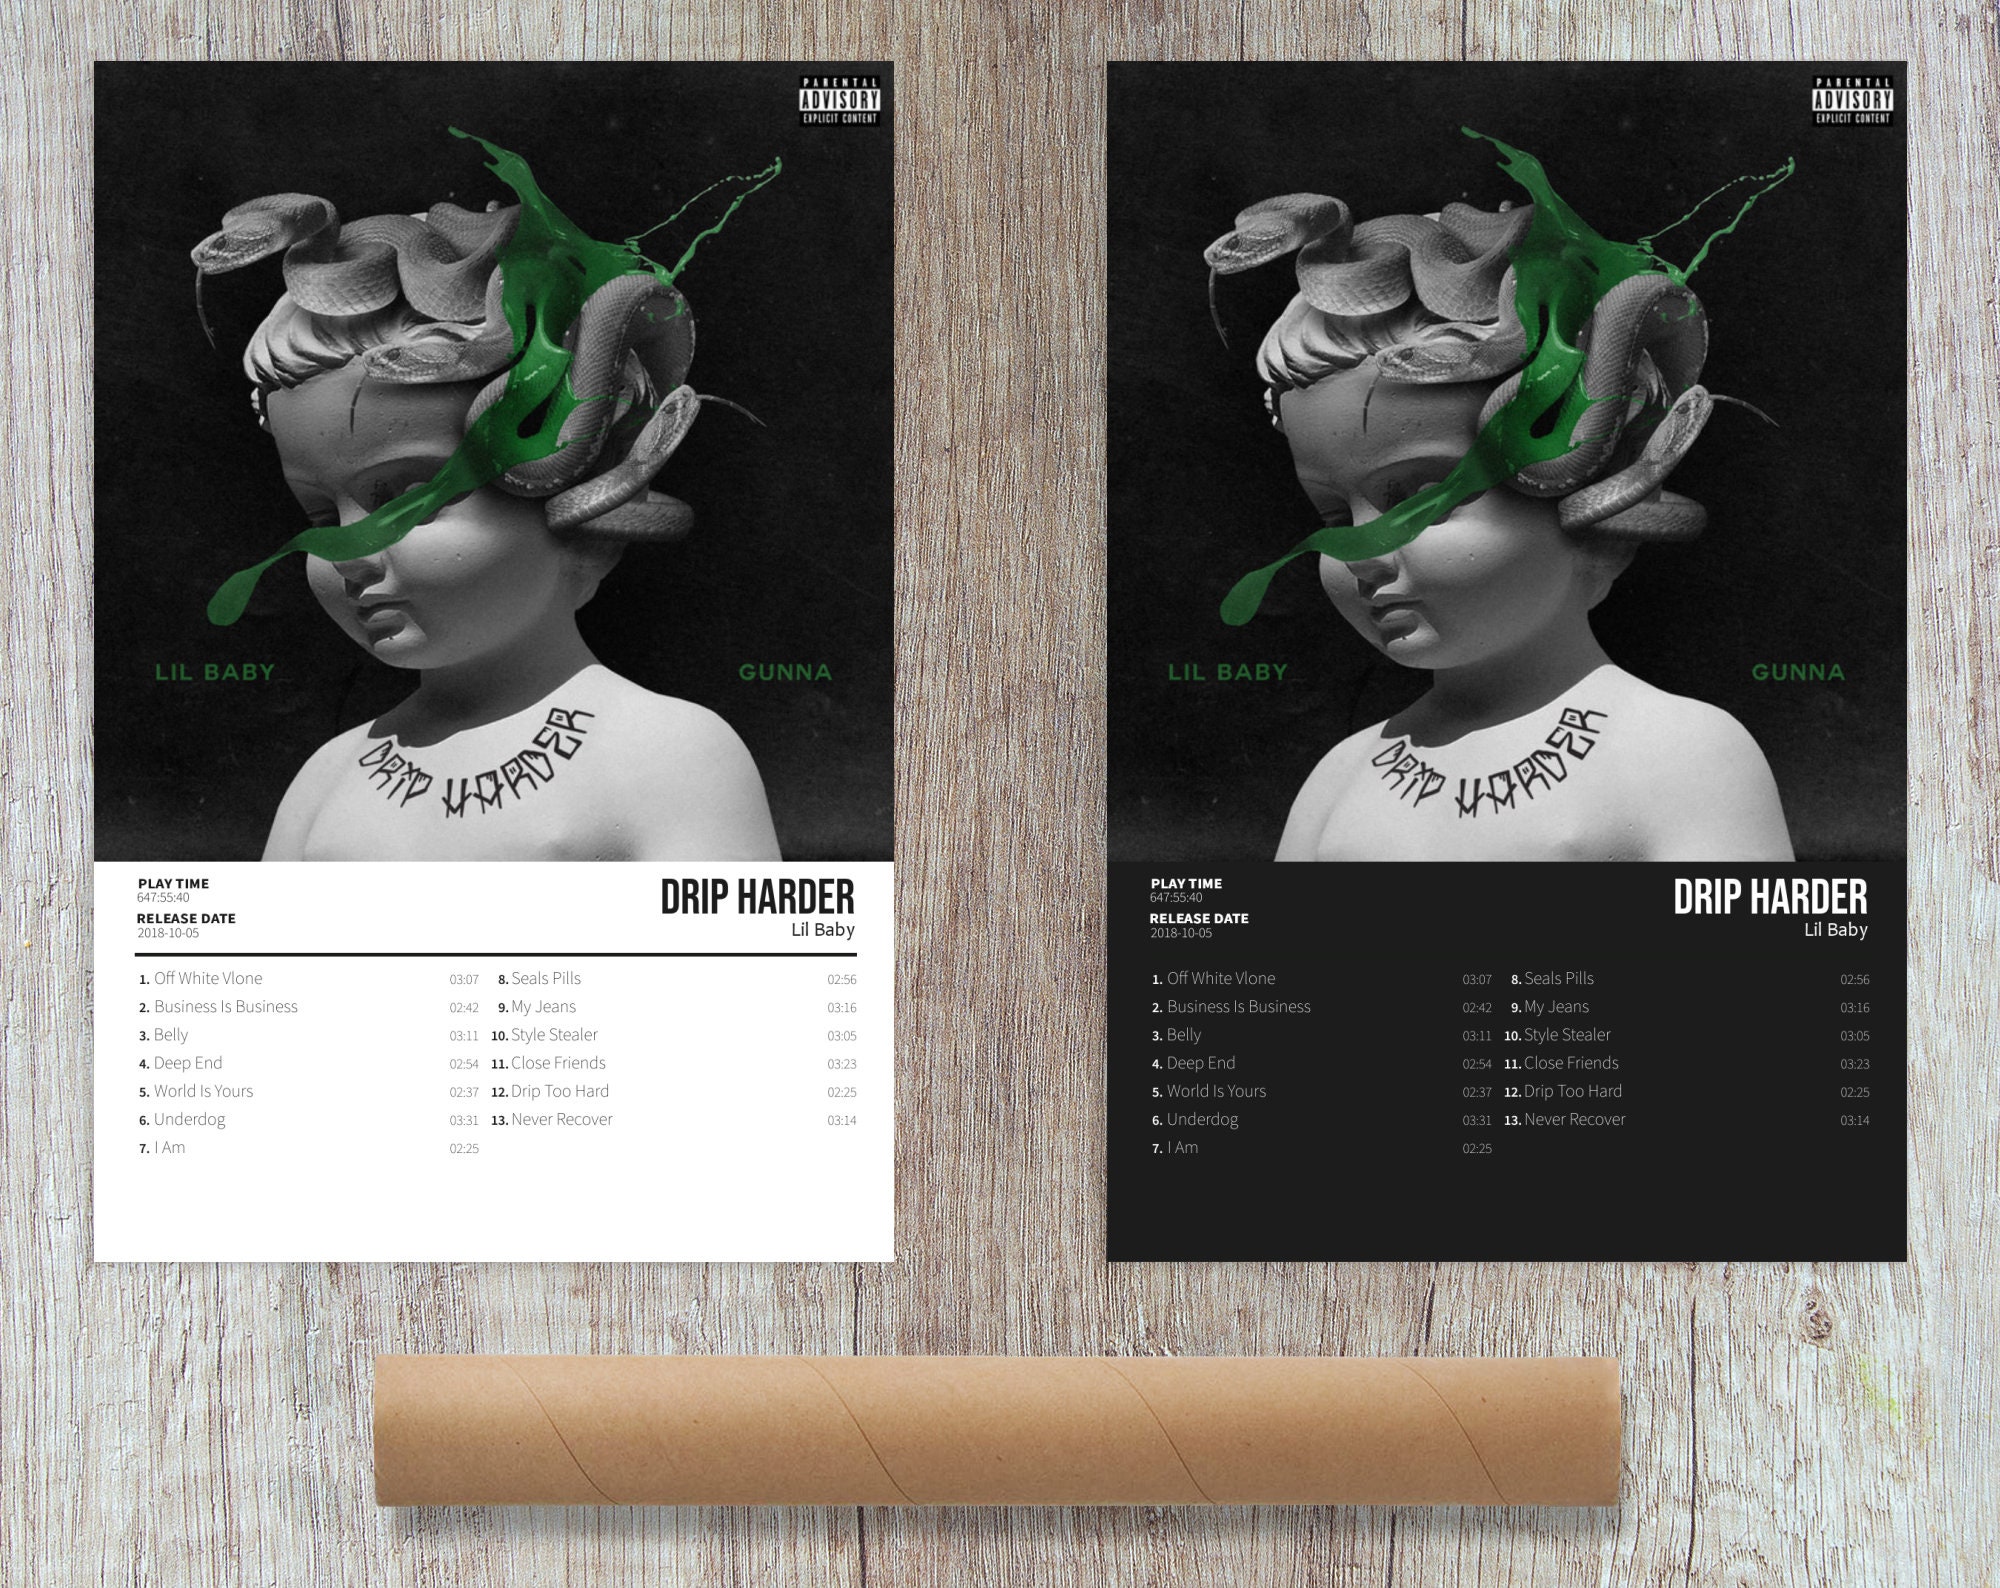 Kensane albums songs playlists  Listen on Deezer